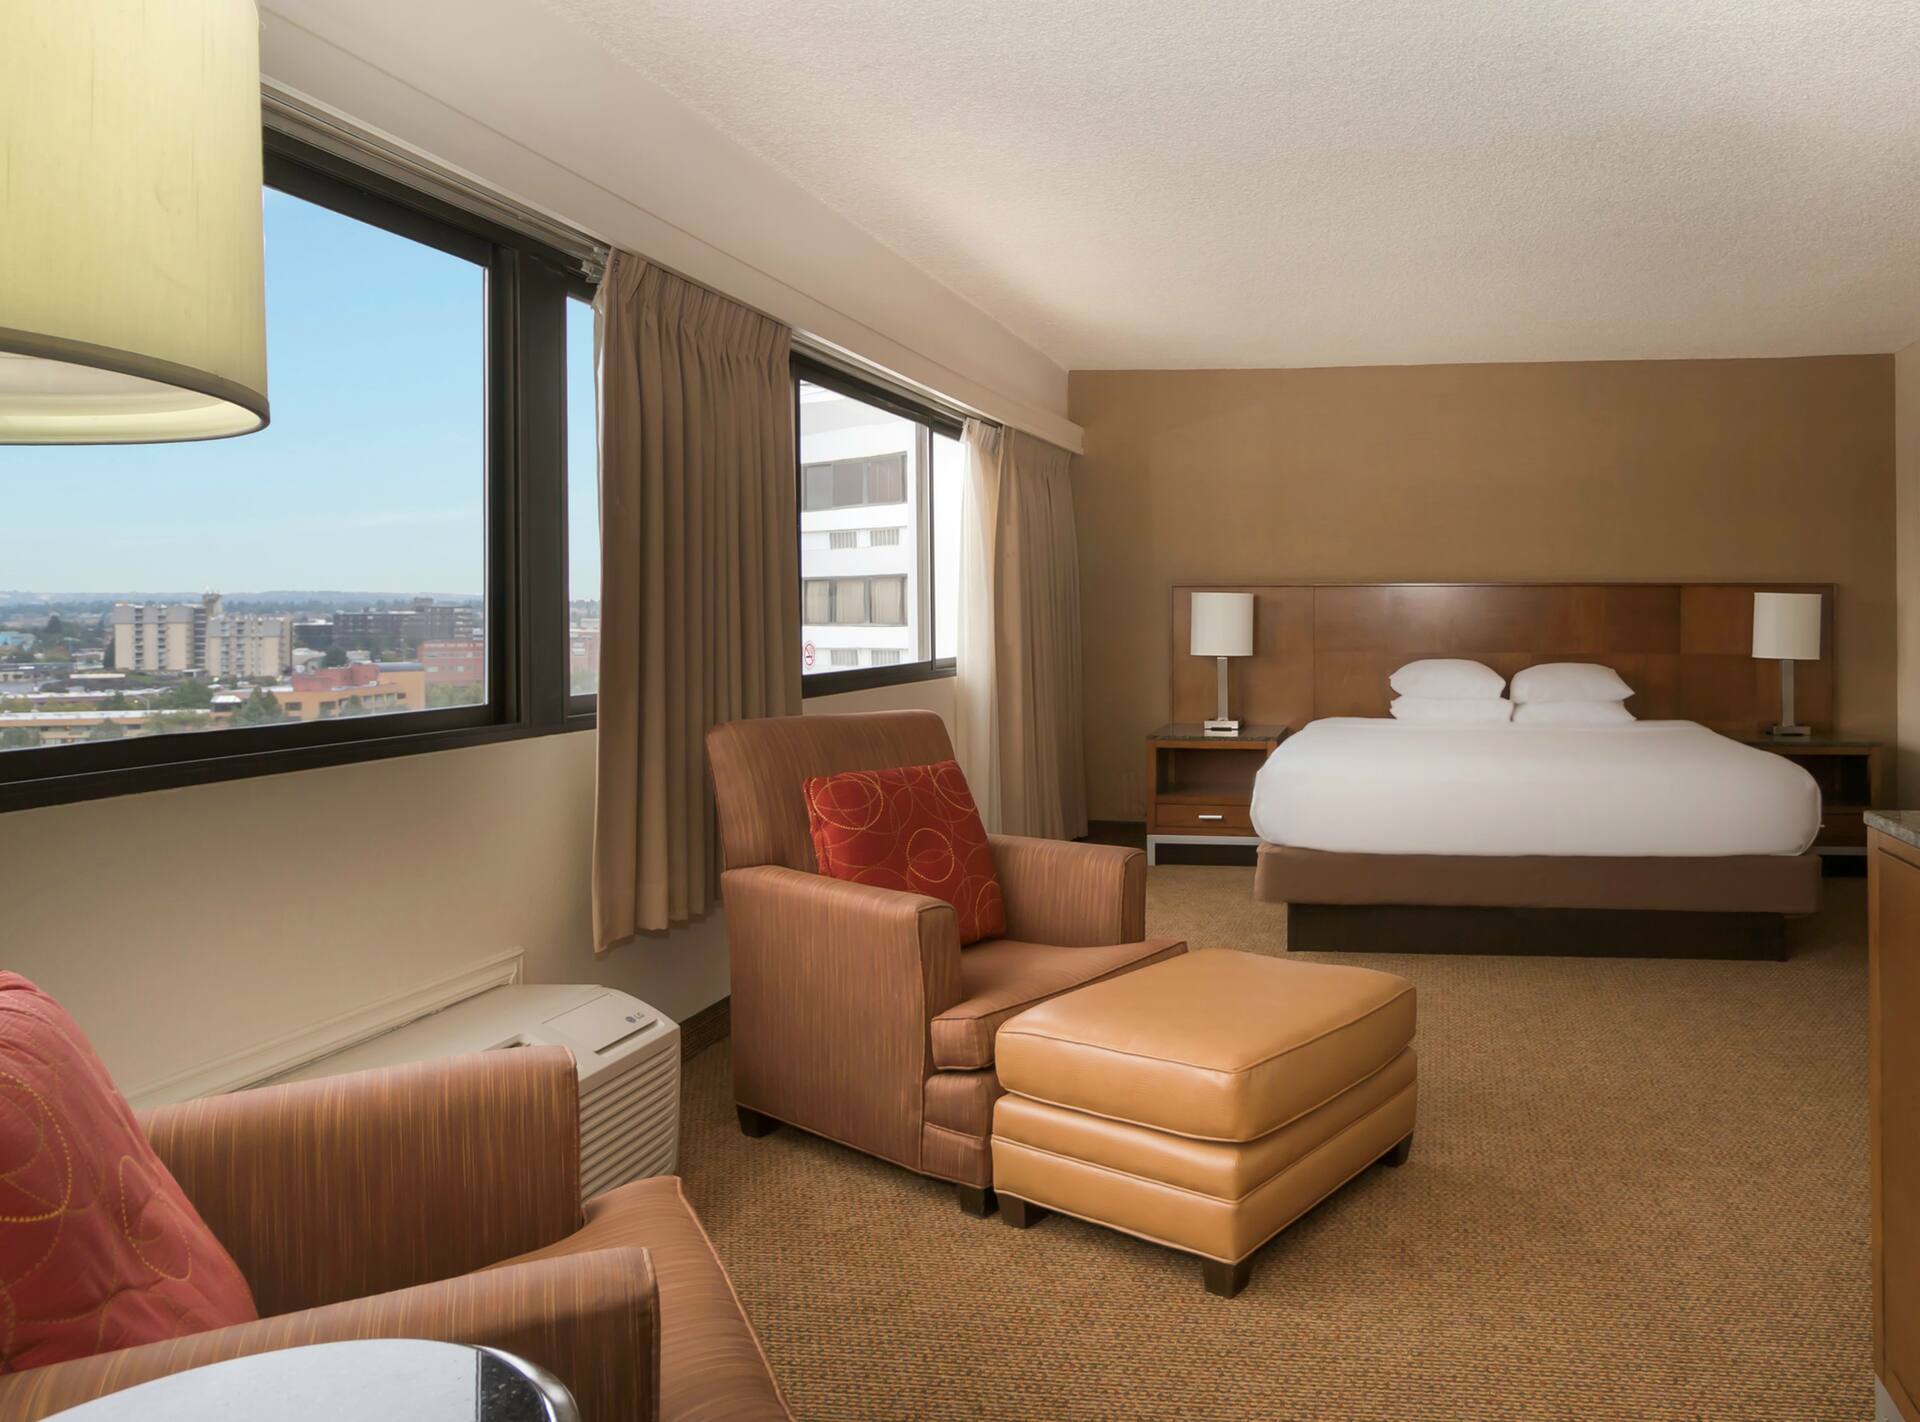 Photo of DoubleTree by Hilton Hotel Spokane City Center, Spokane, WA